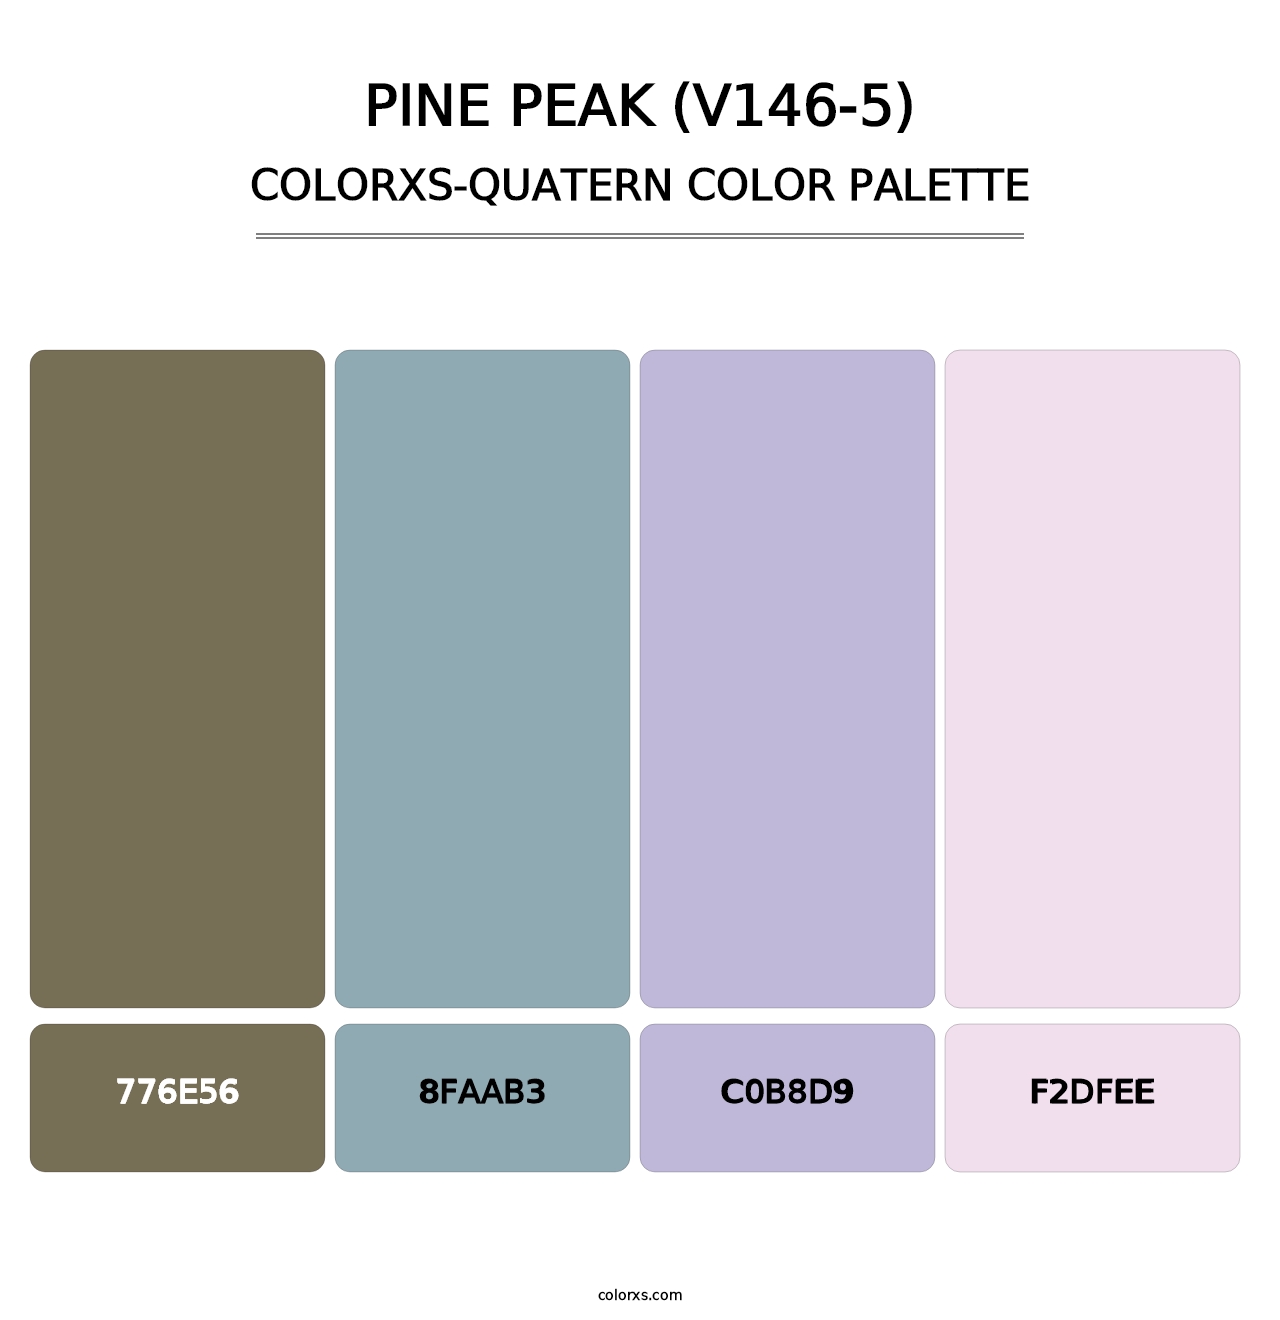 Pine Peak (V146-5) - Colorxs Quatern Palette